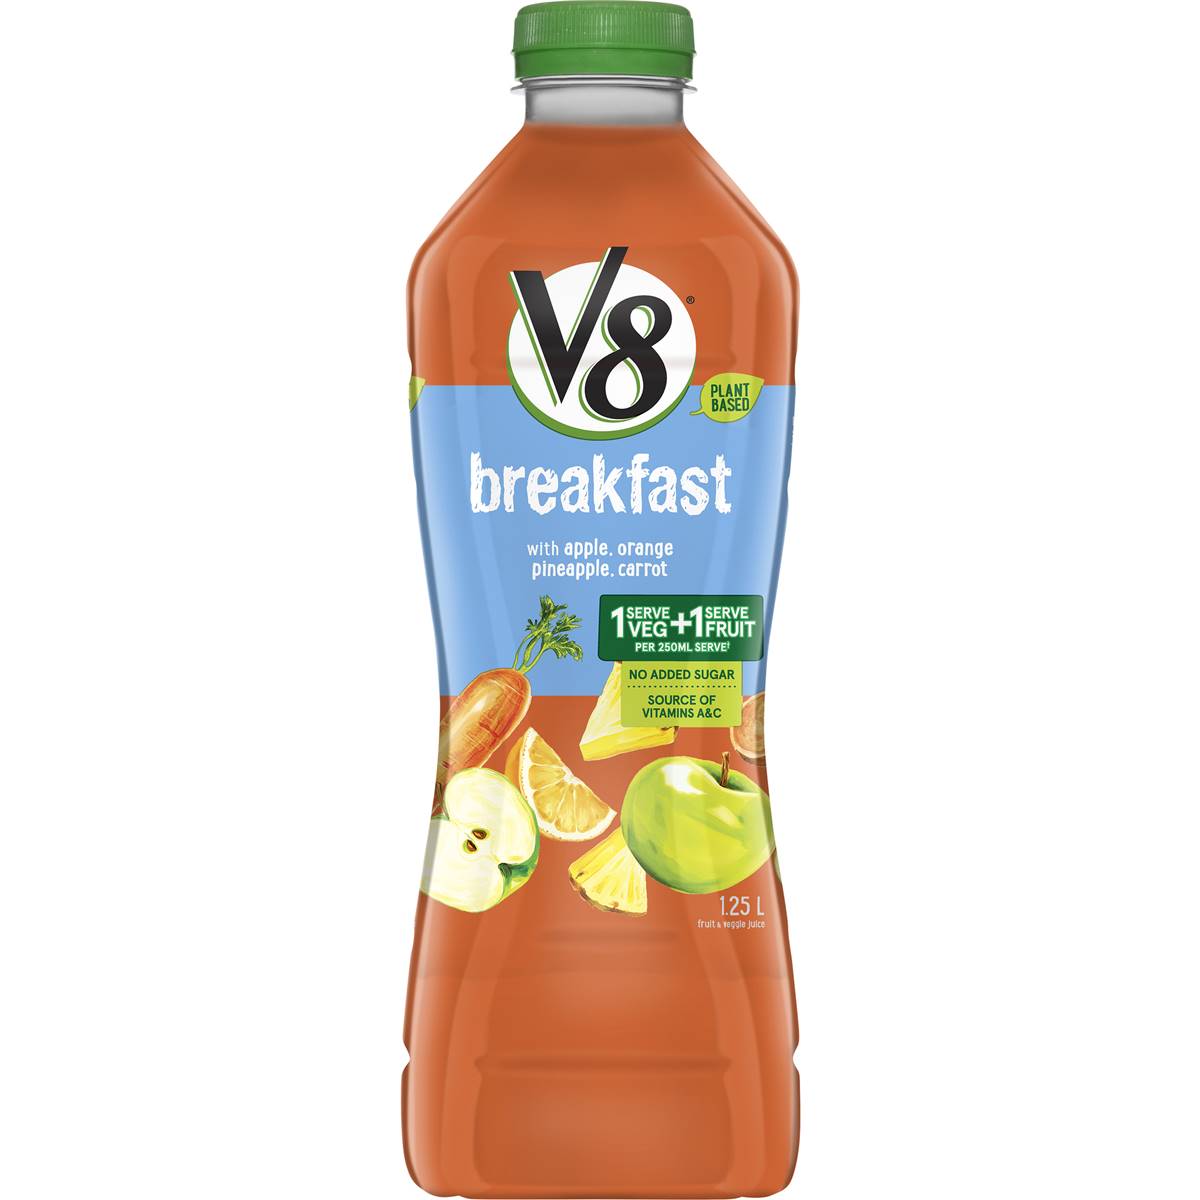 Calories in V8 Breakfast Juice